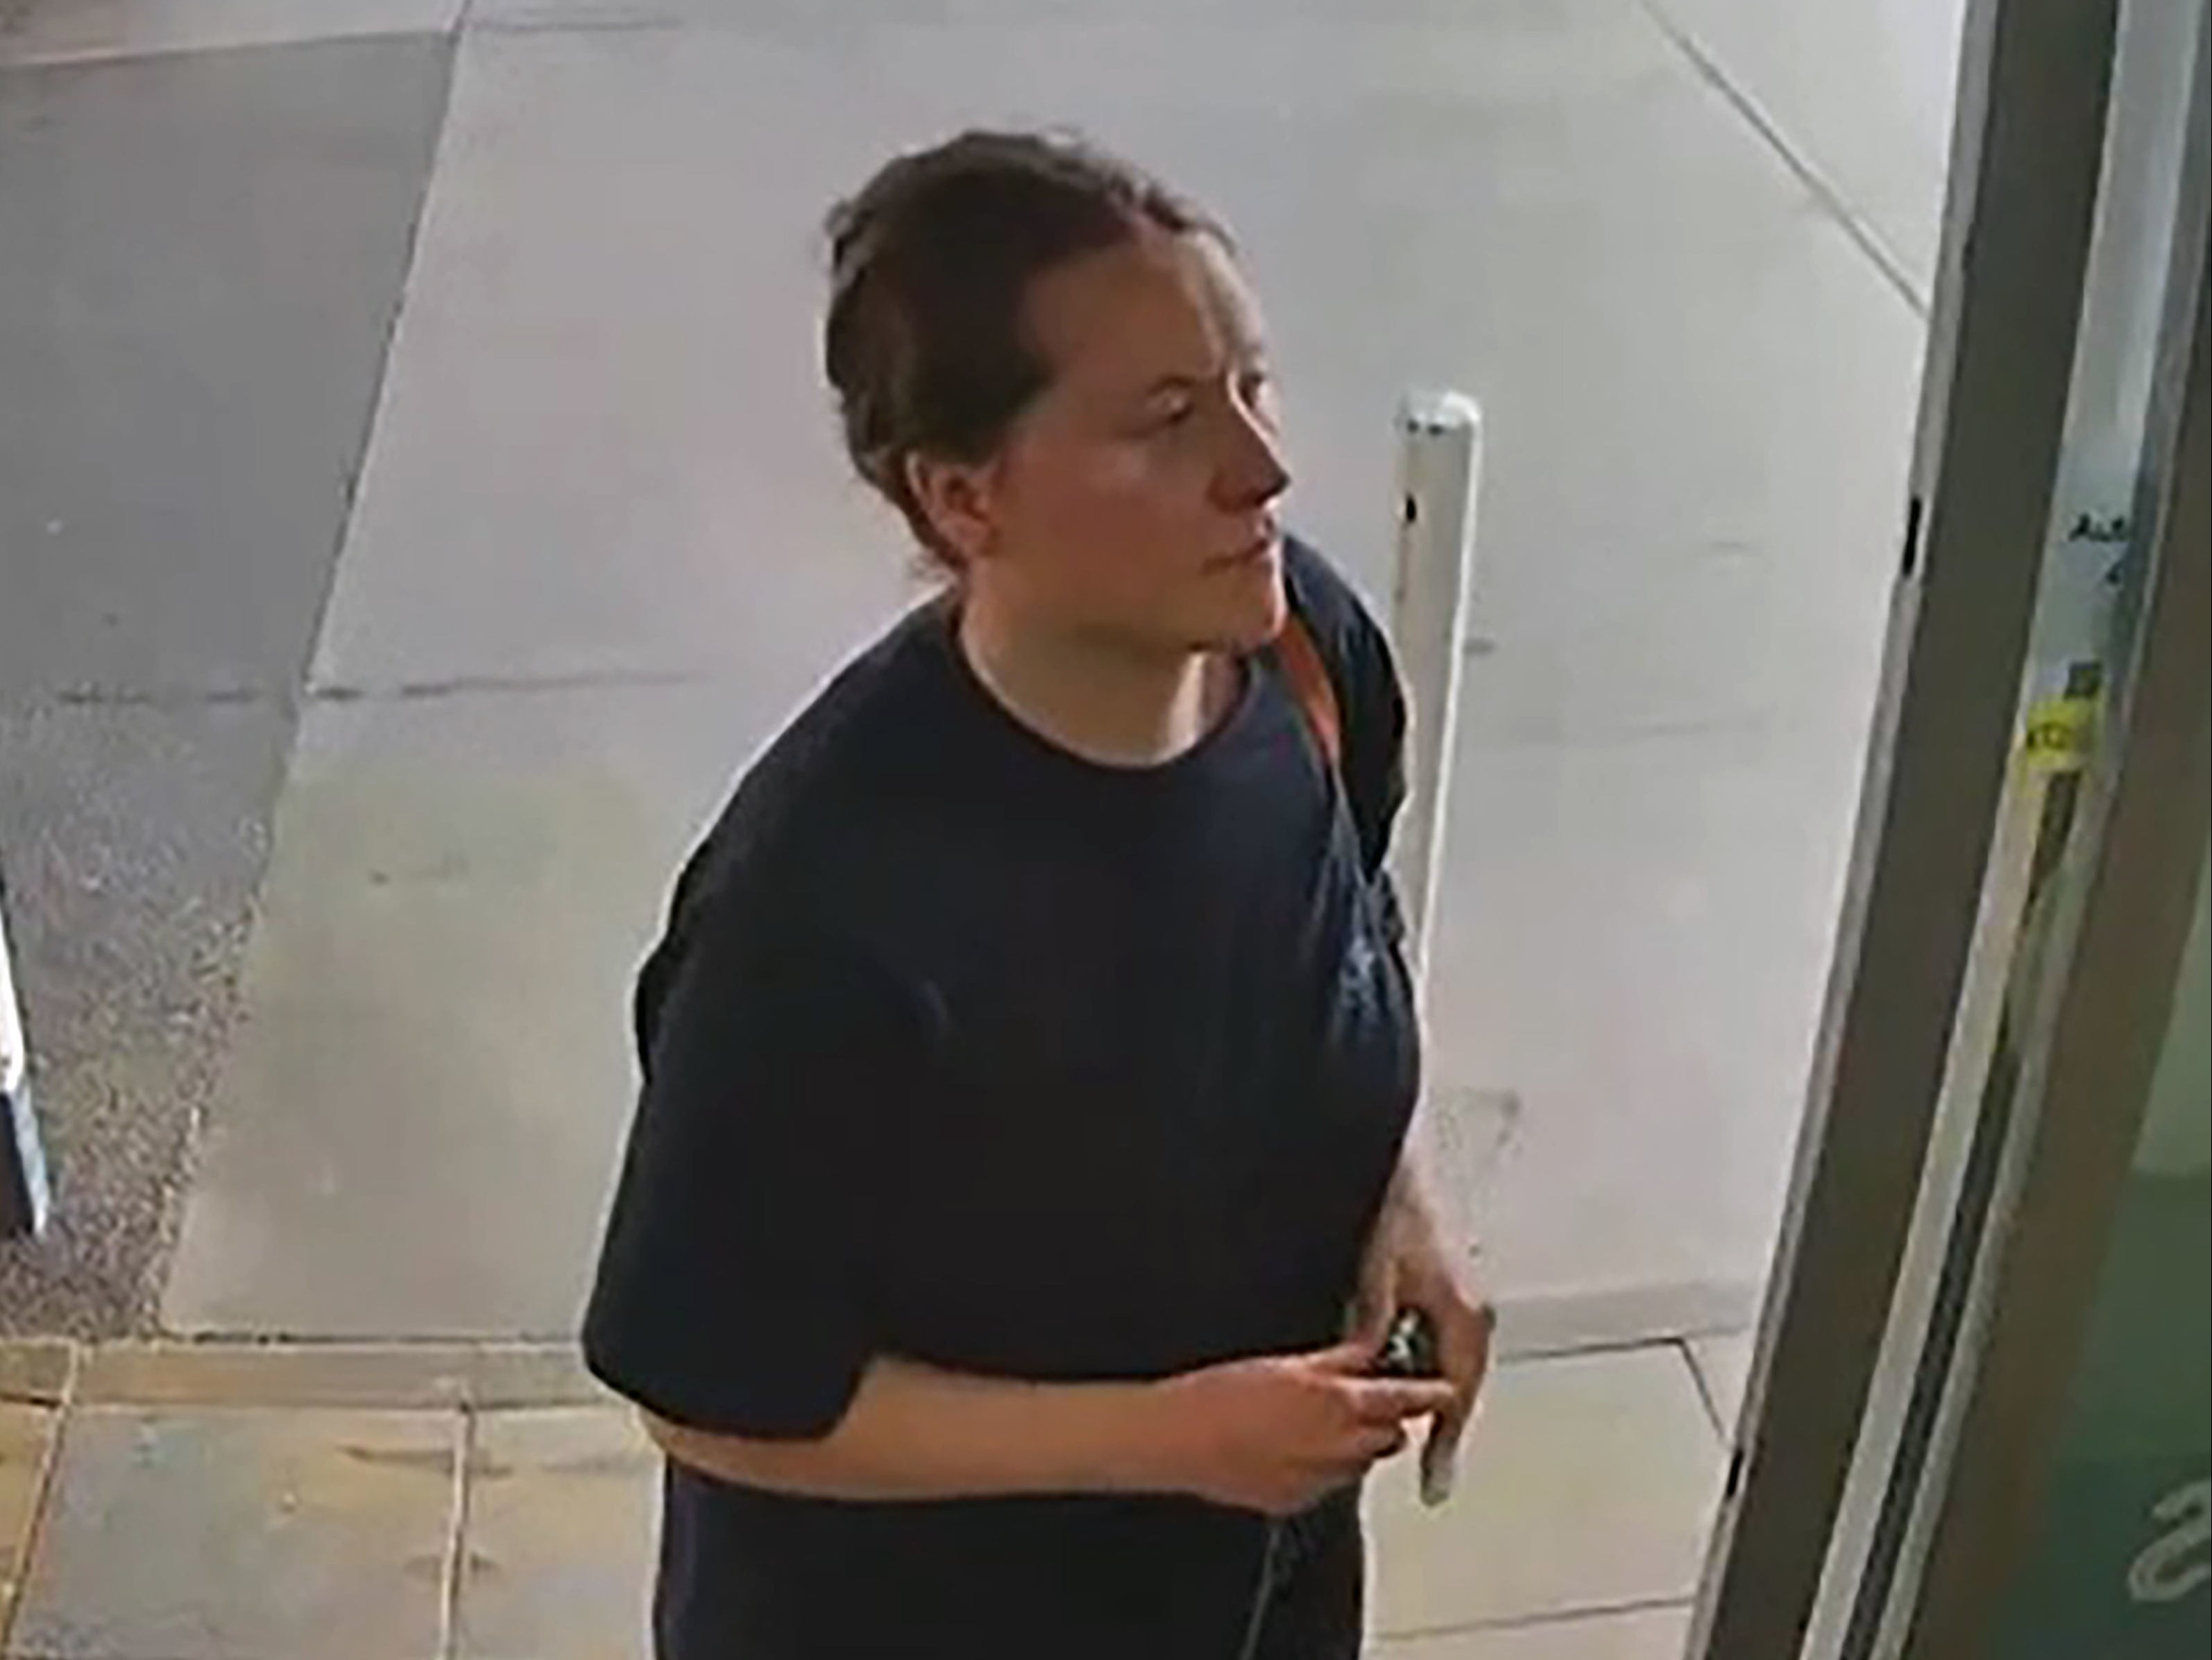 Jemma Mitchell was seen entering a service station shop near Bristol on CCTV